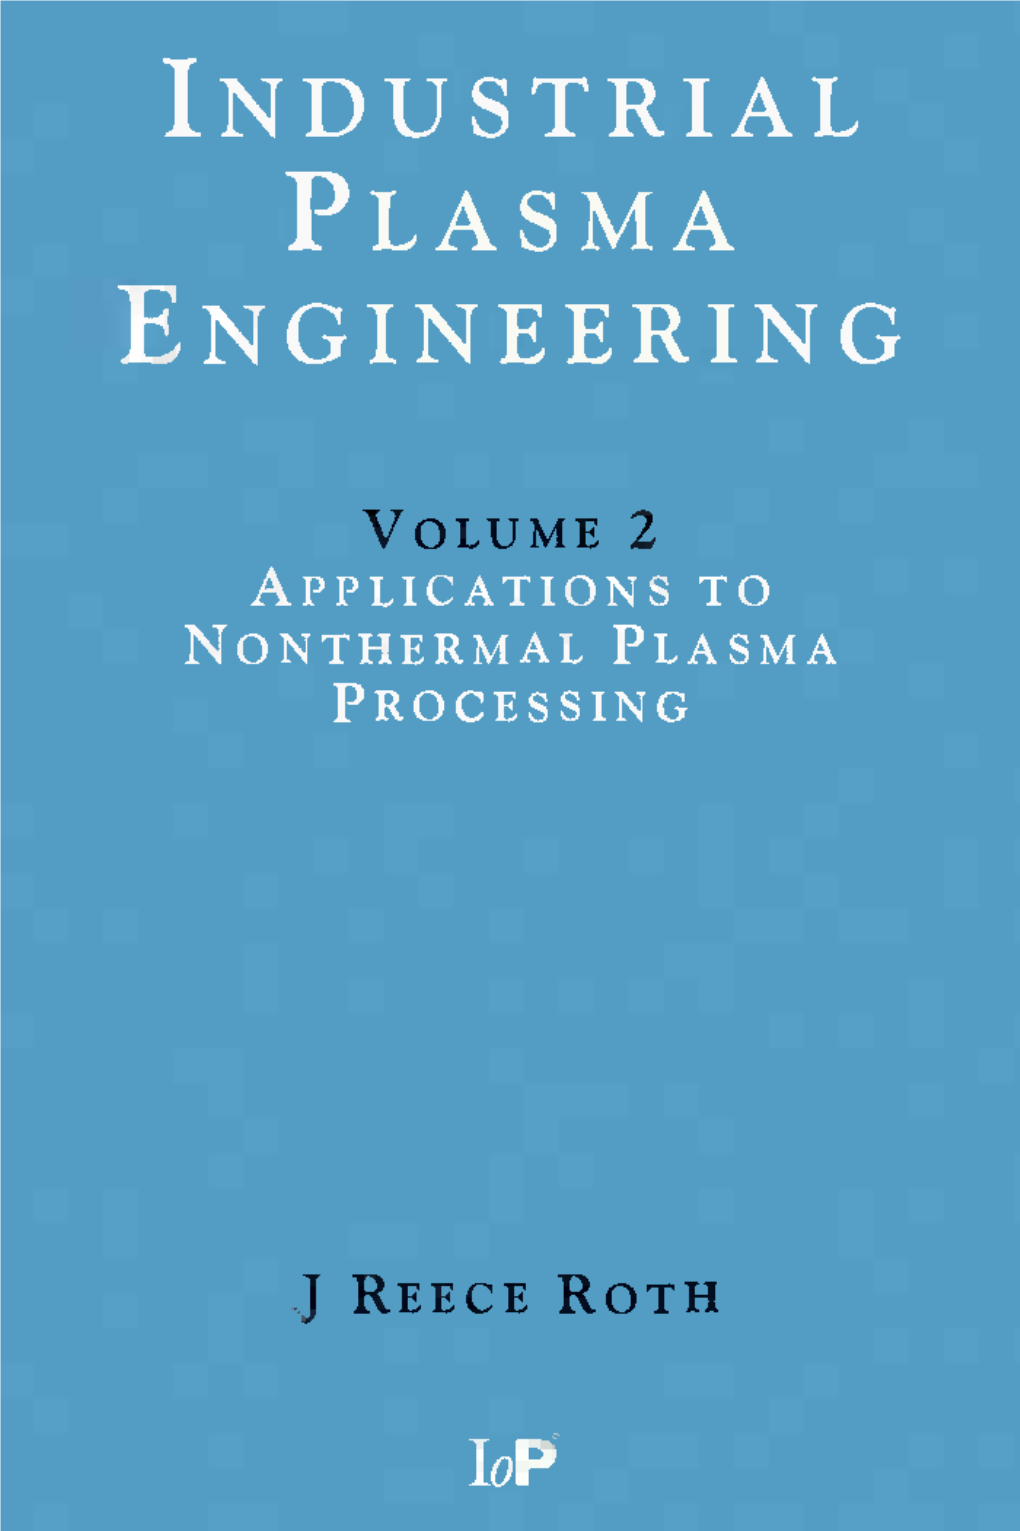 Industrial Plasma Engineering. Vol. 2, Applications to Nonthermal Plasma